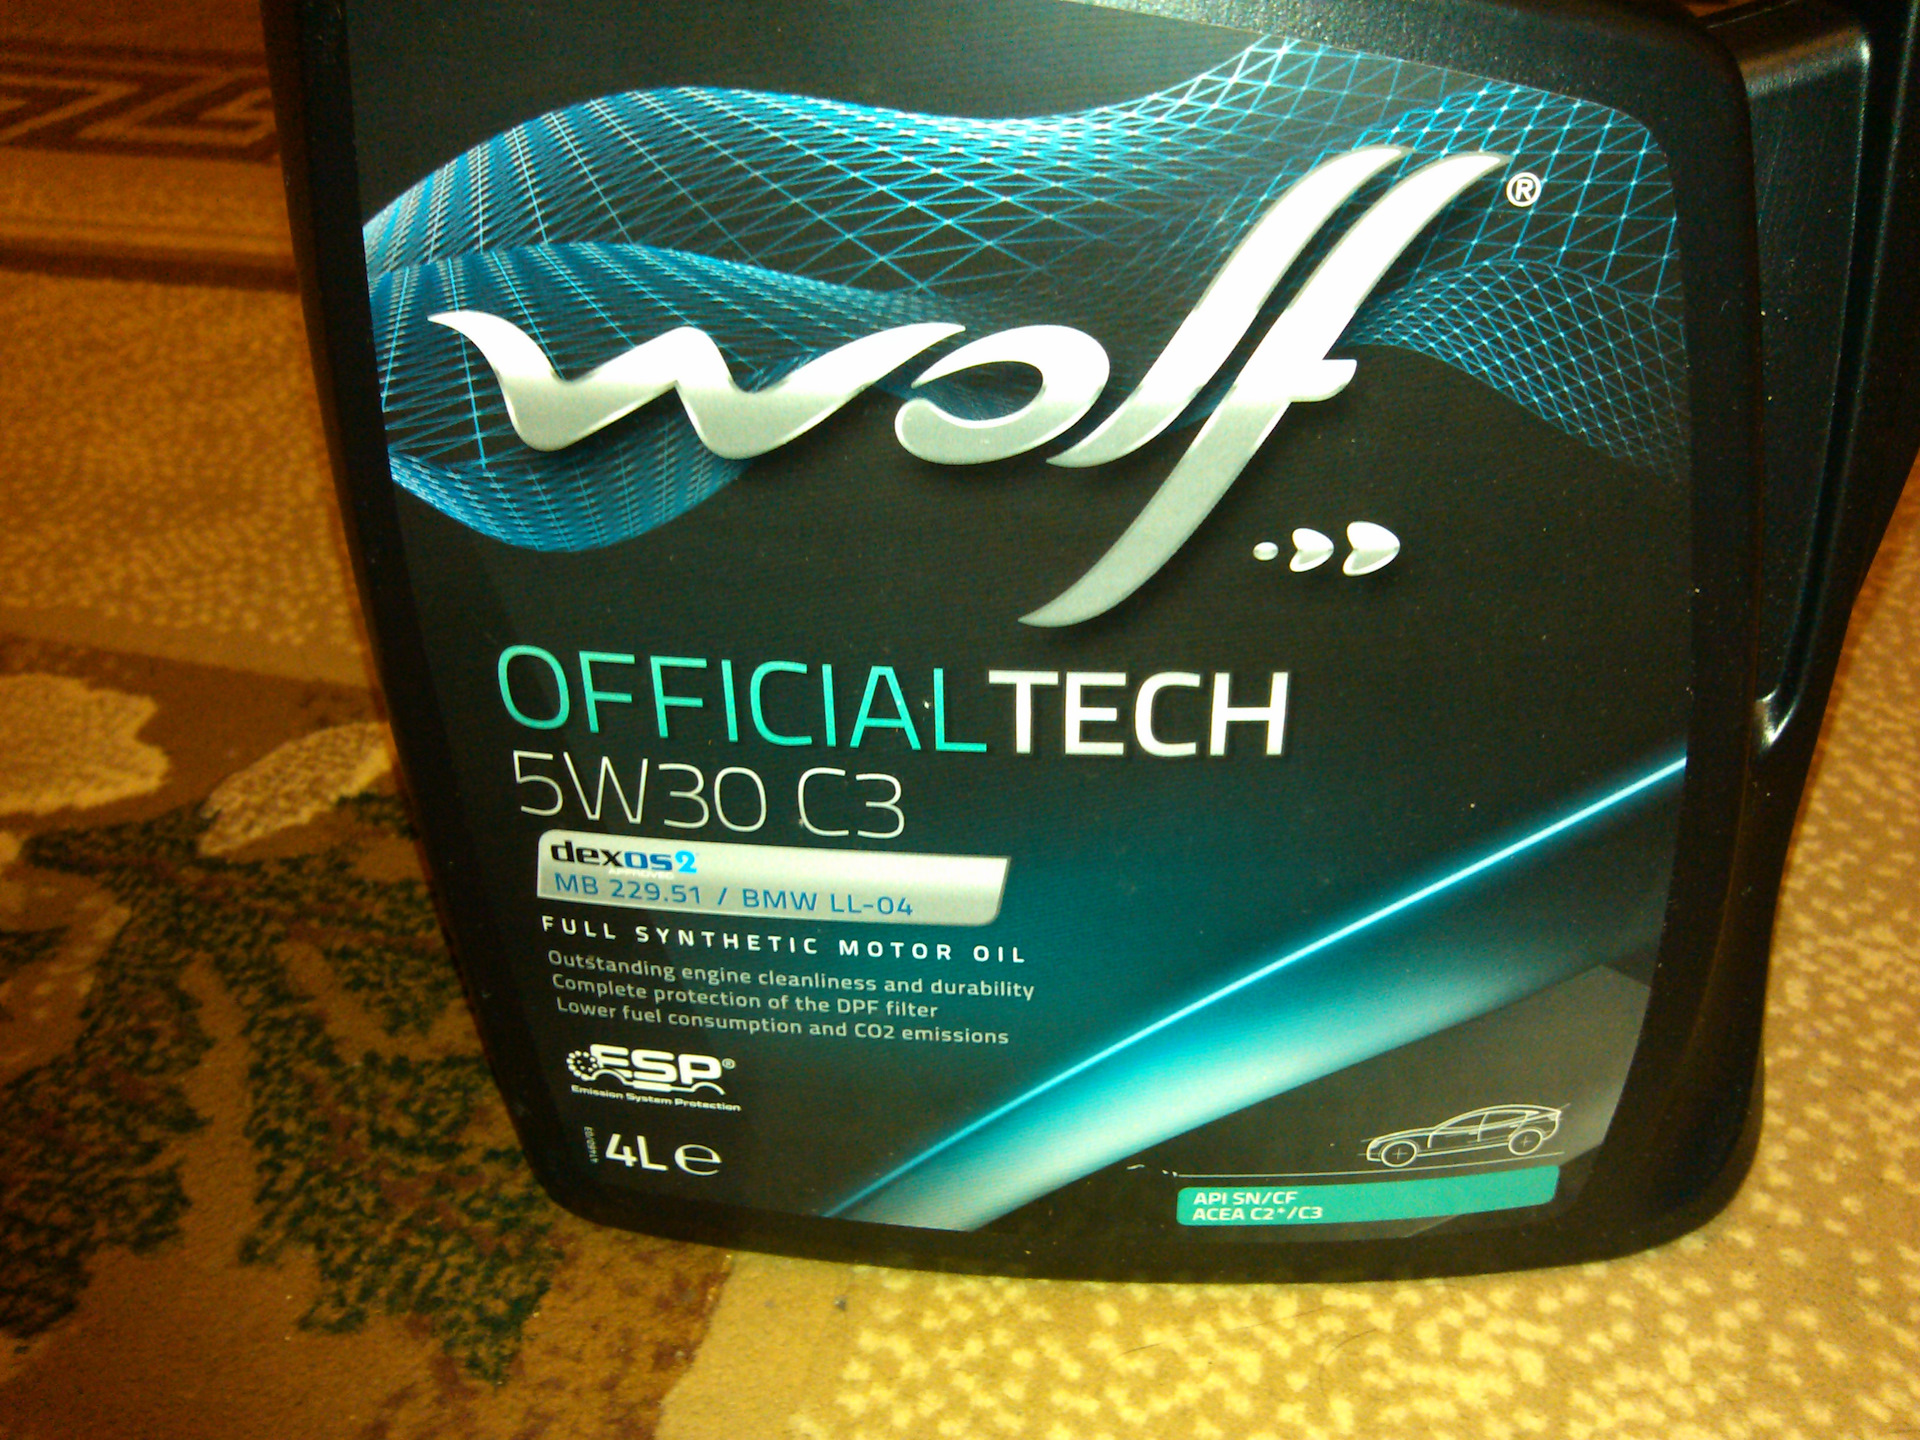 5 ц 30. Wolf OFFICIALTECH 5w30 артикул 8308116. Wolf officialtech5w30 c2/c3. Масло Wolf 5w30 c3. Масло Wolf 5w30 OFFICIALTECH c3.